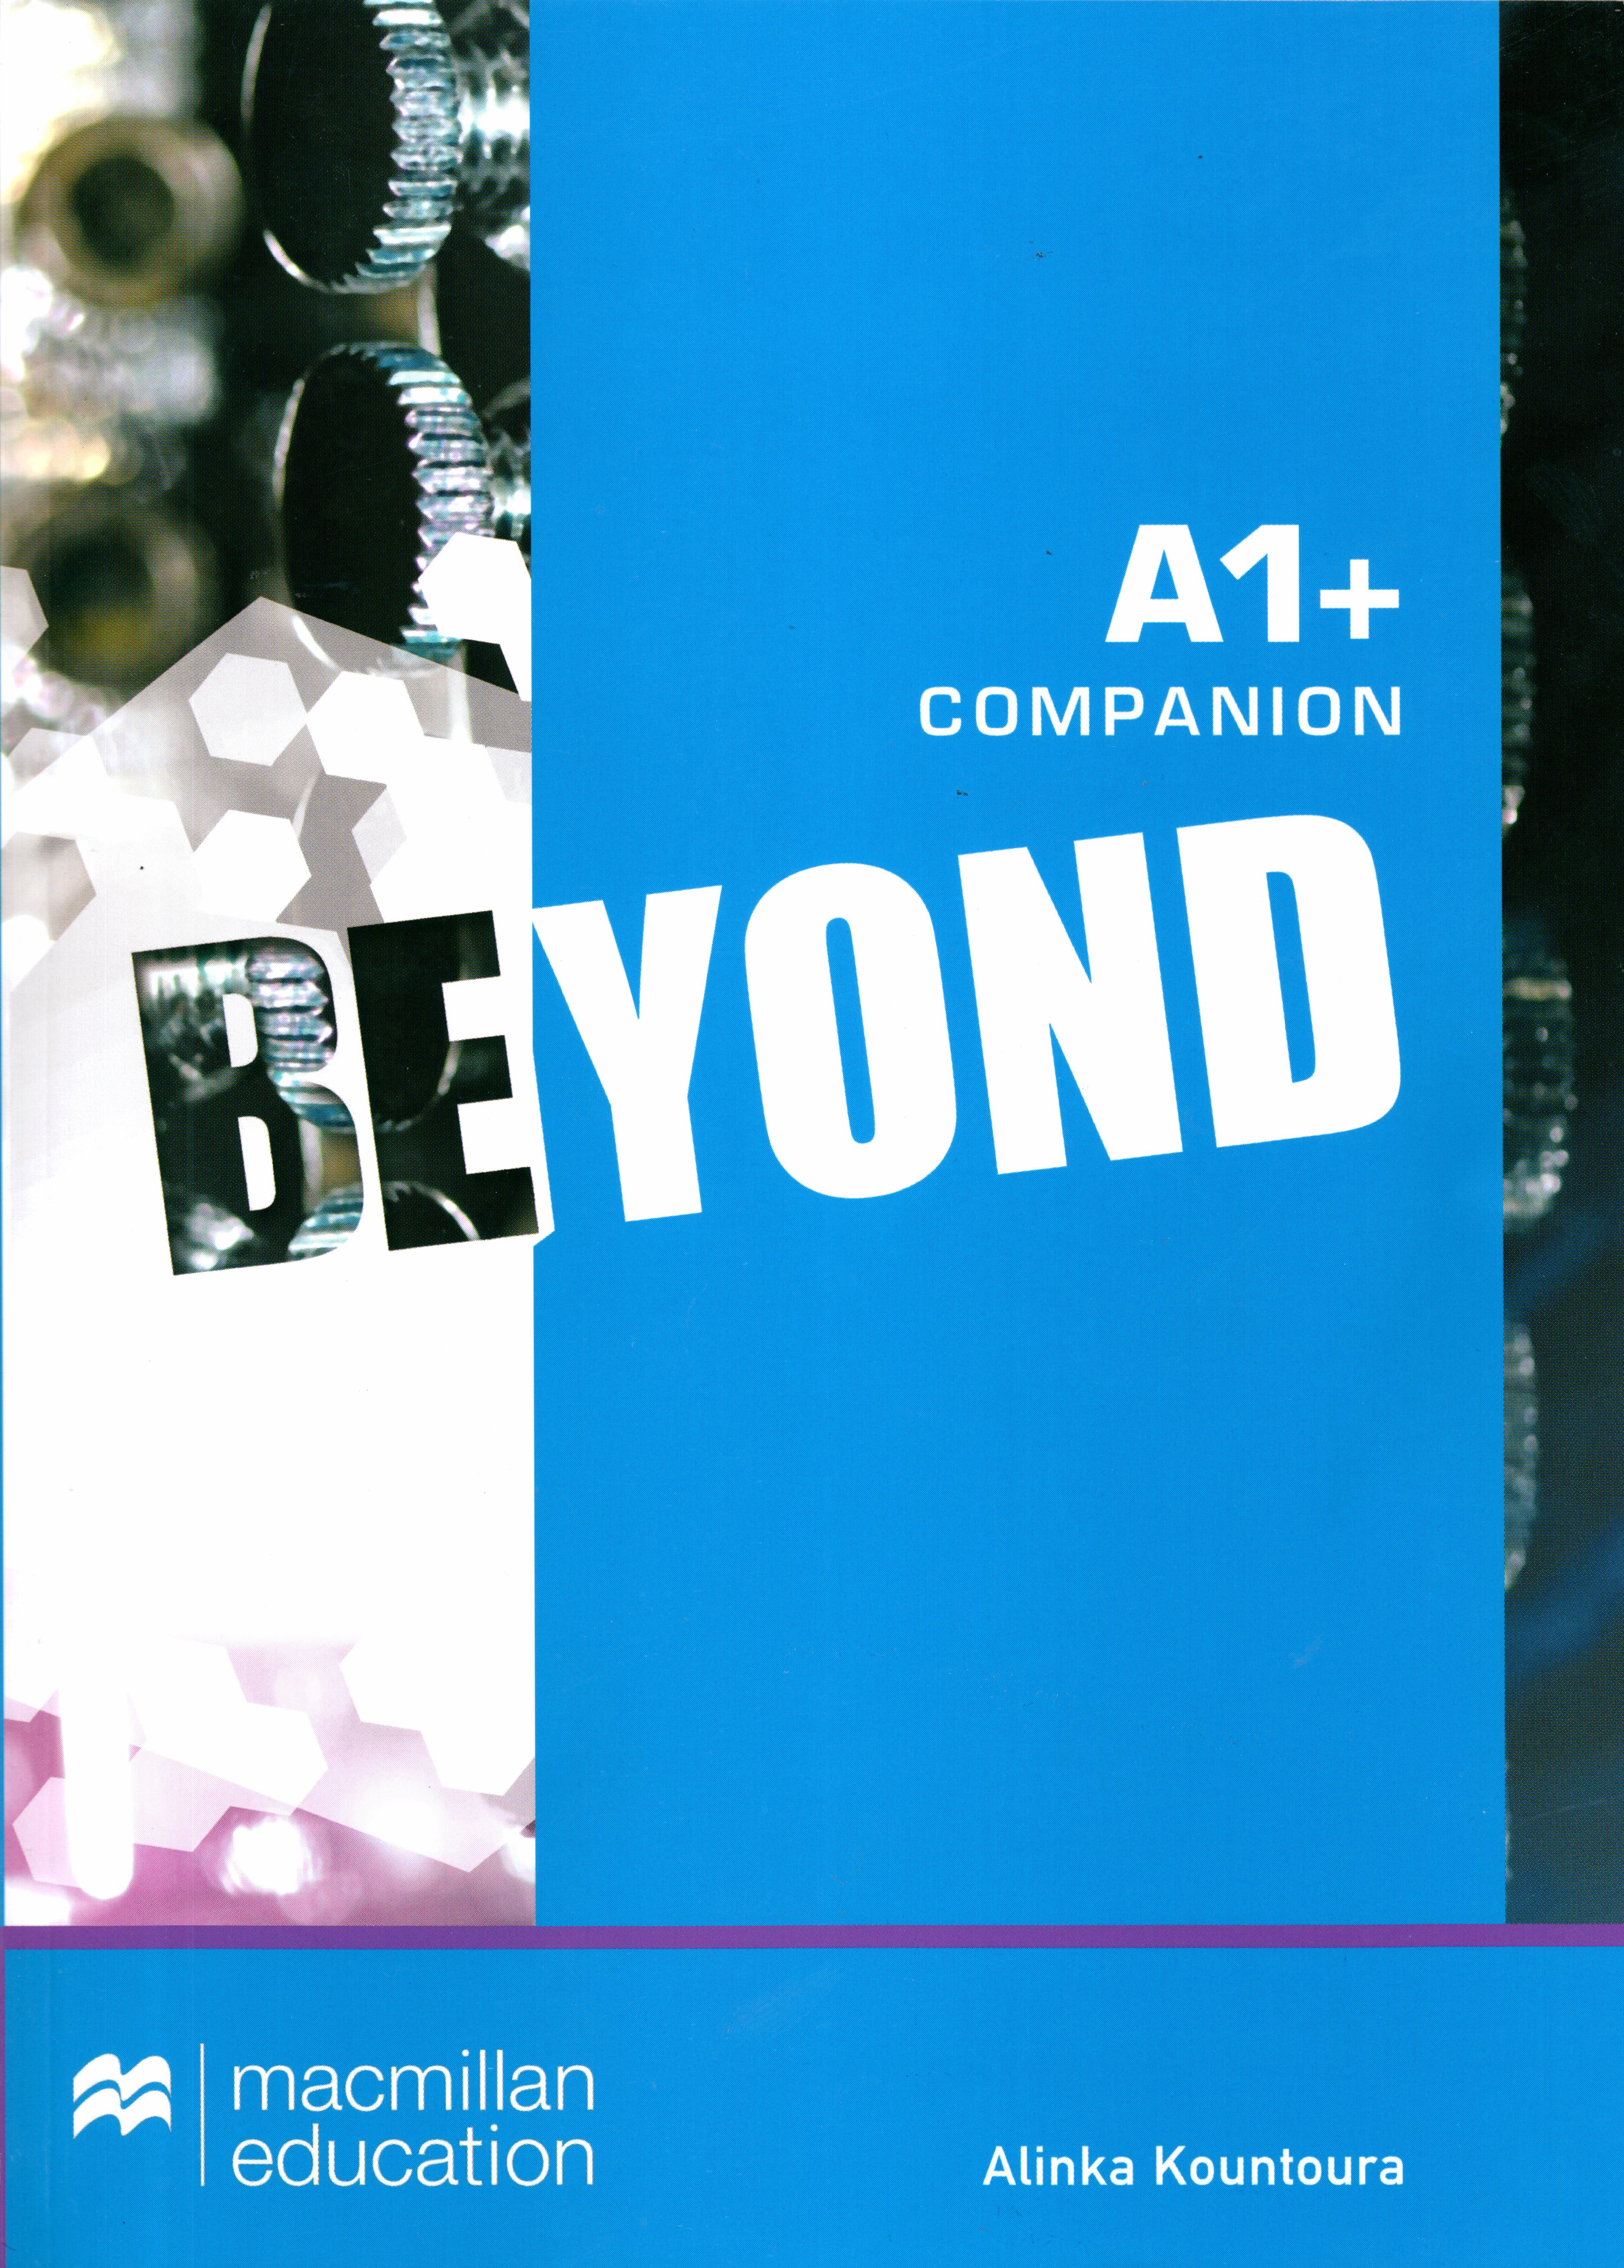 BEYOND A1+ COMPANION